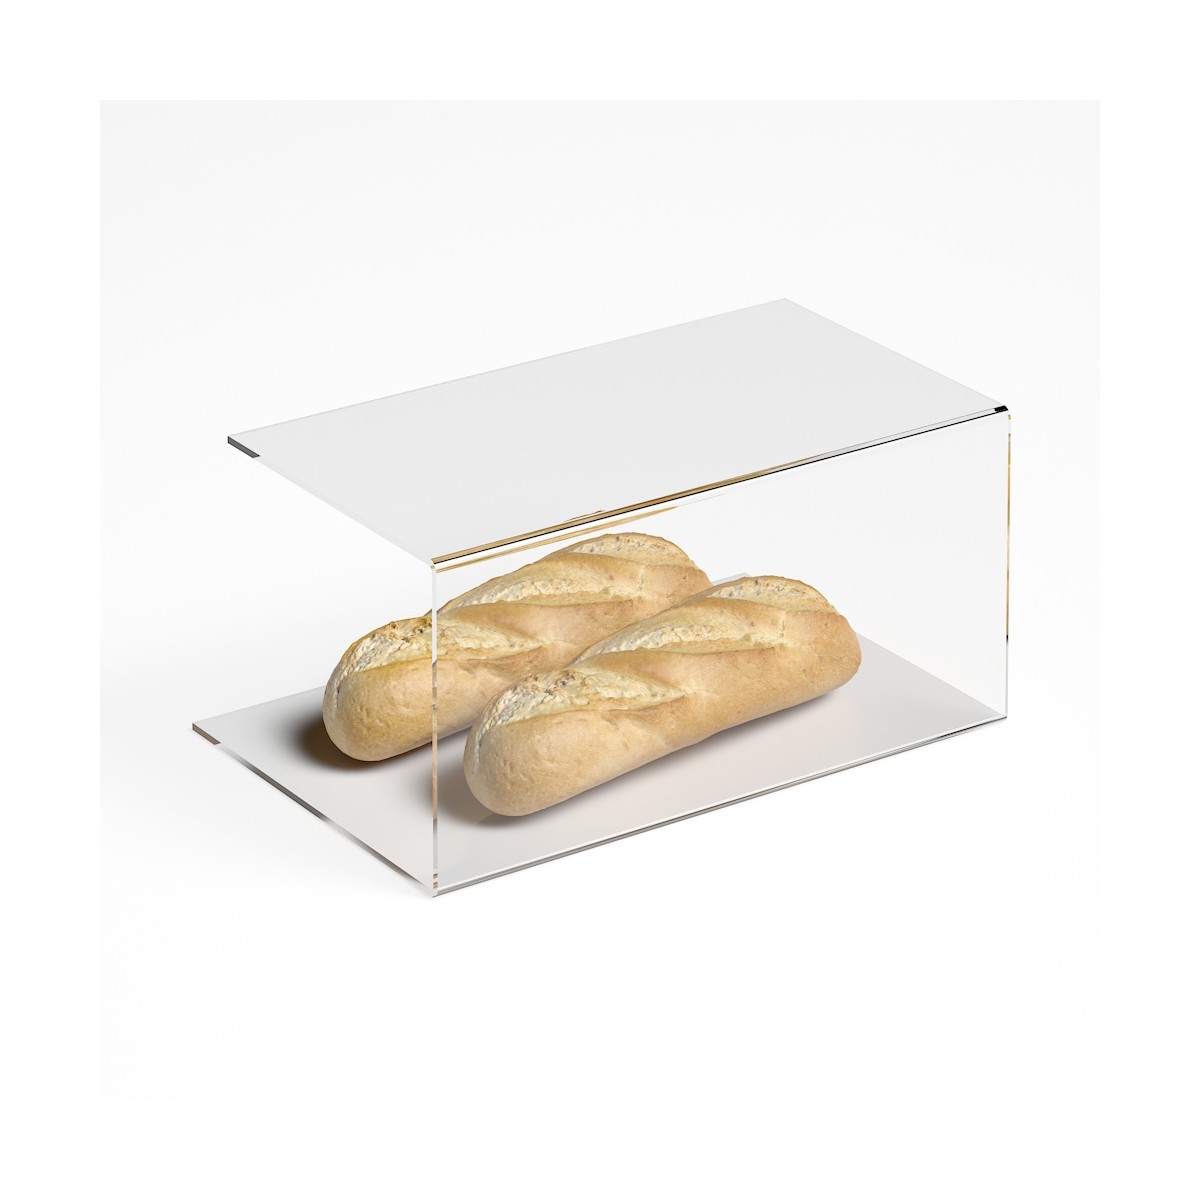 E-1186 PAR-A - Parafiato parasputi in plexiglass trasparente per alimenti - Misure: 45x25x H22 cm